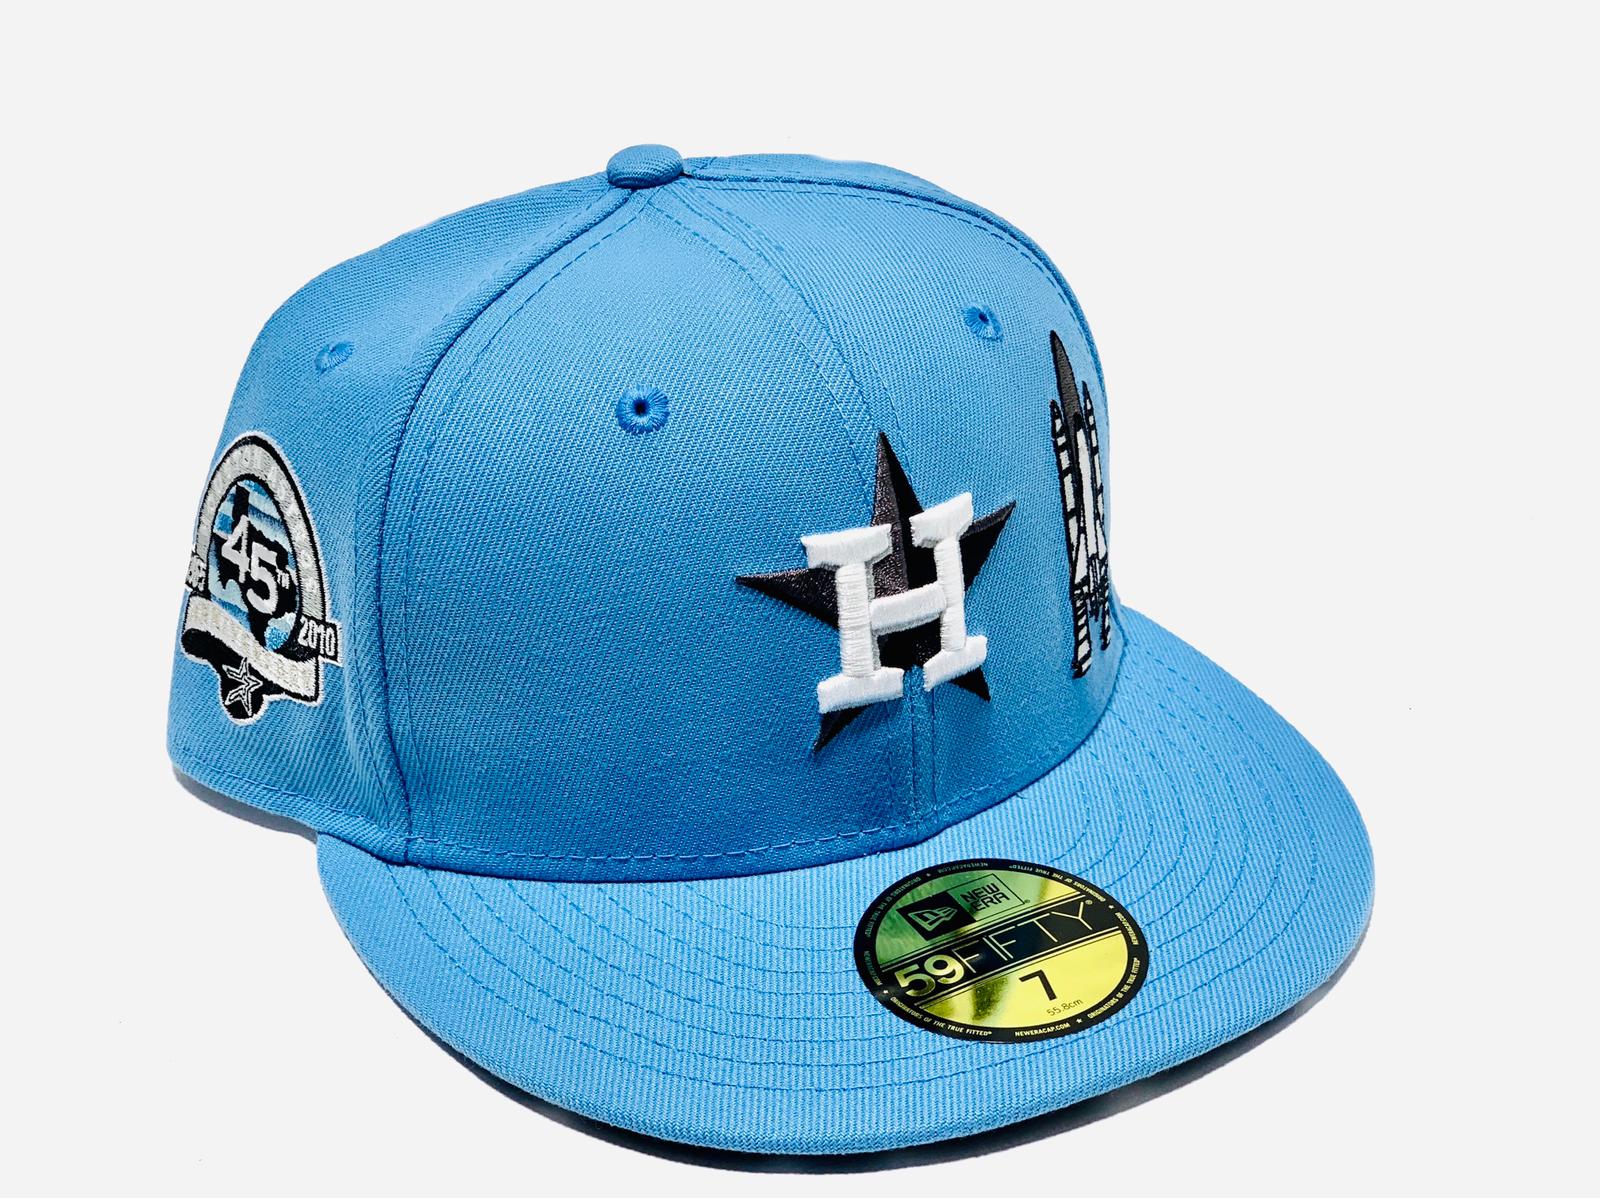 1997-1999 Houston Astros Hat Vintage Houston Astros Hat 